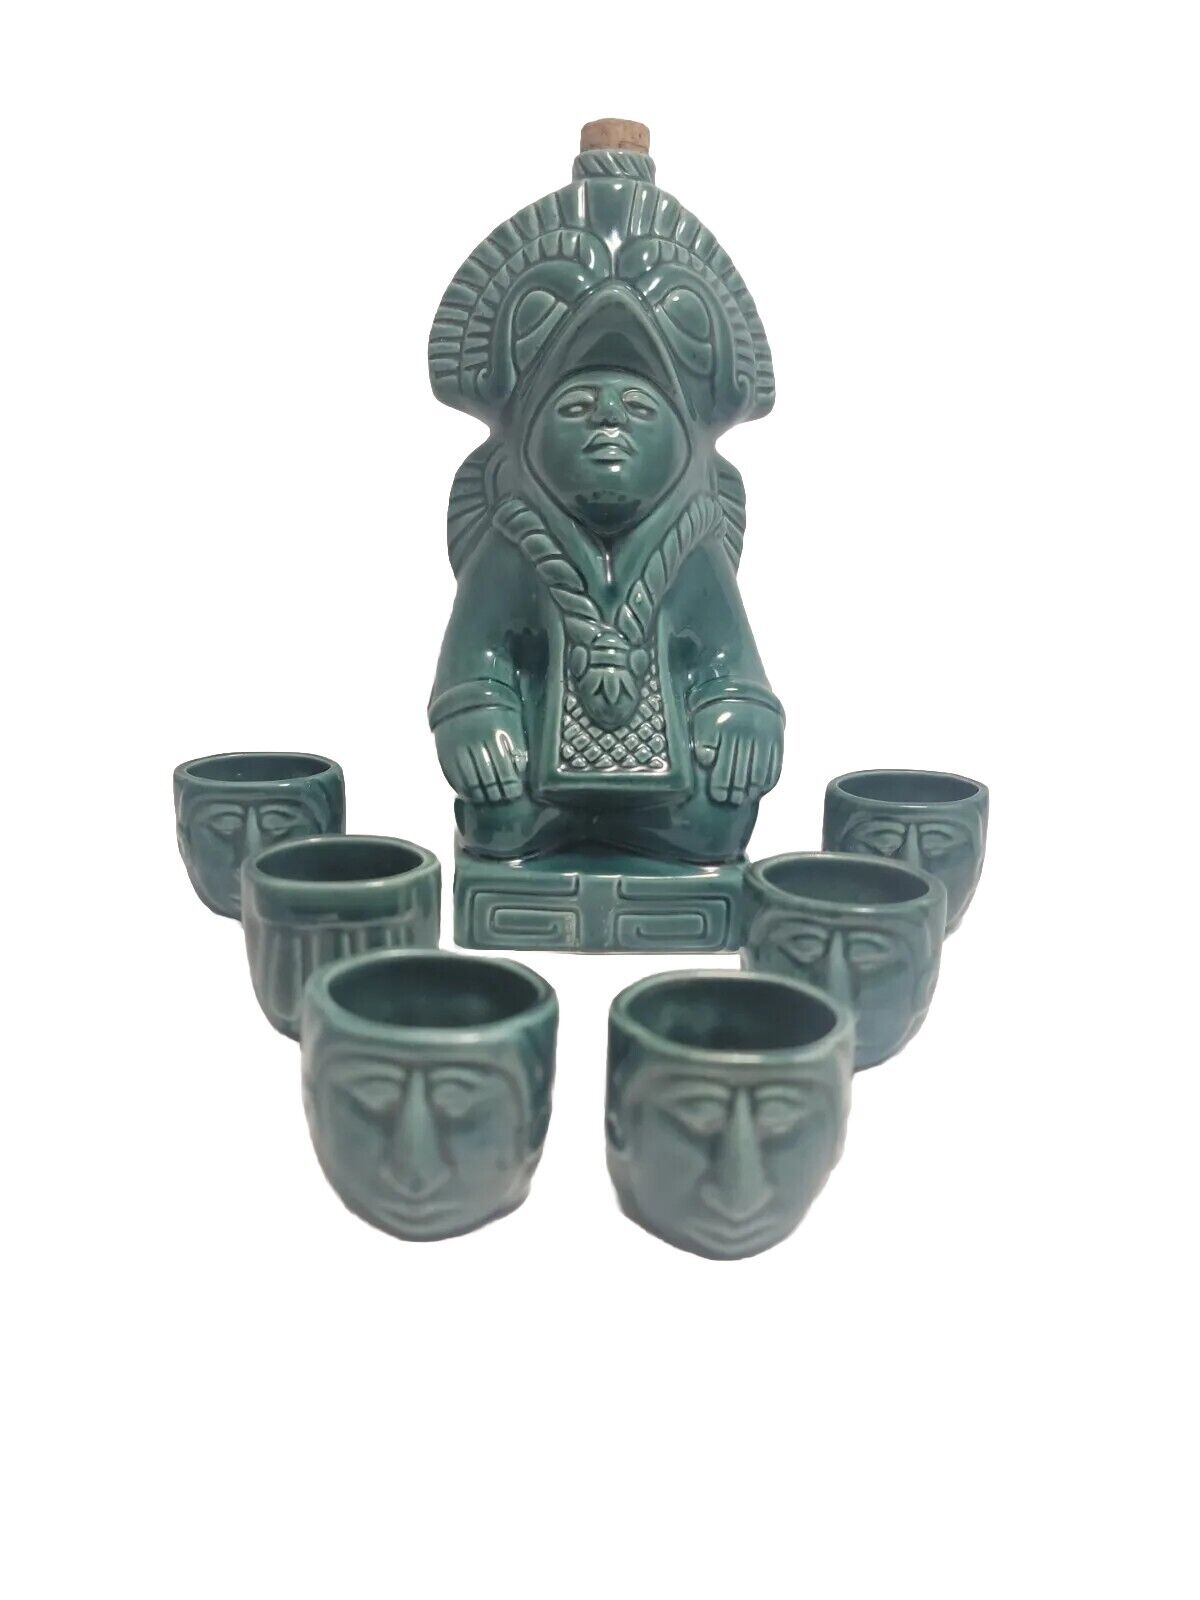 Aztec tiki rum bottle Decanter & 6 Shot Glasses Pottery Bar Set 